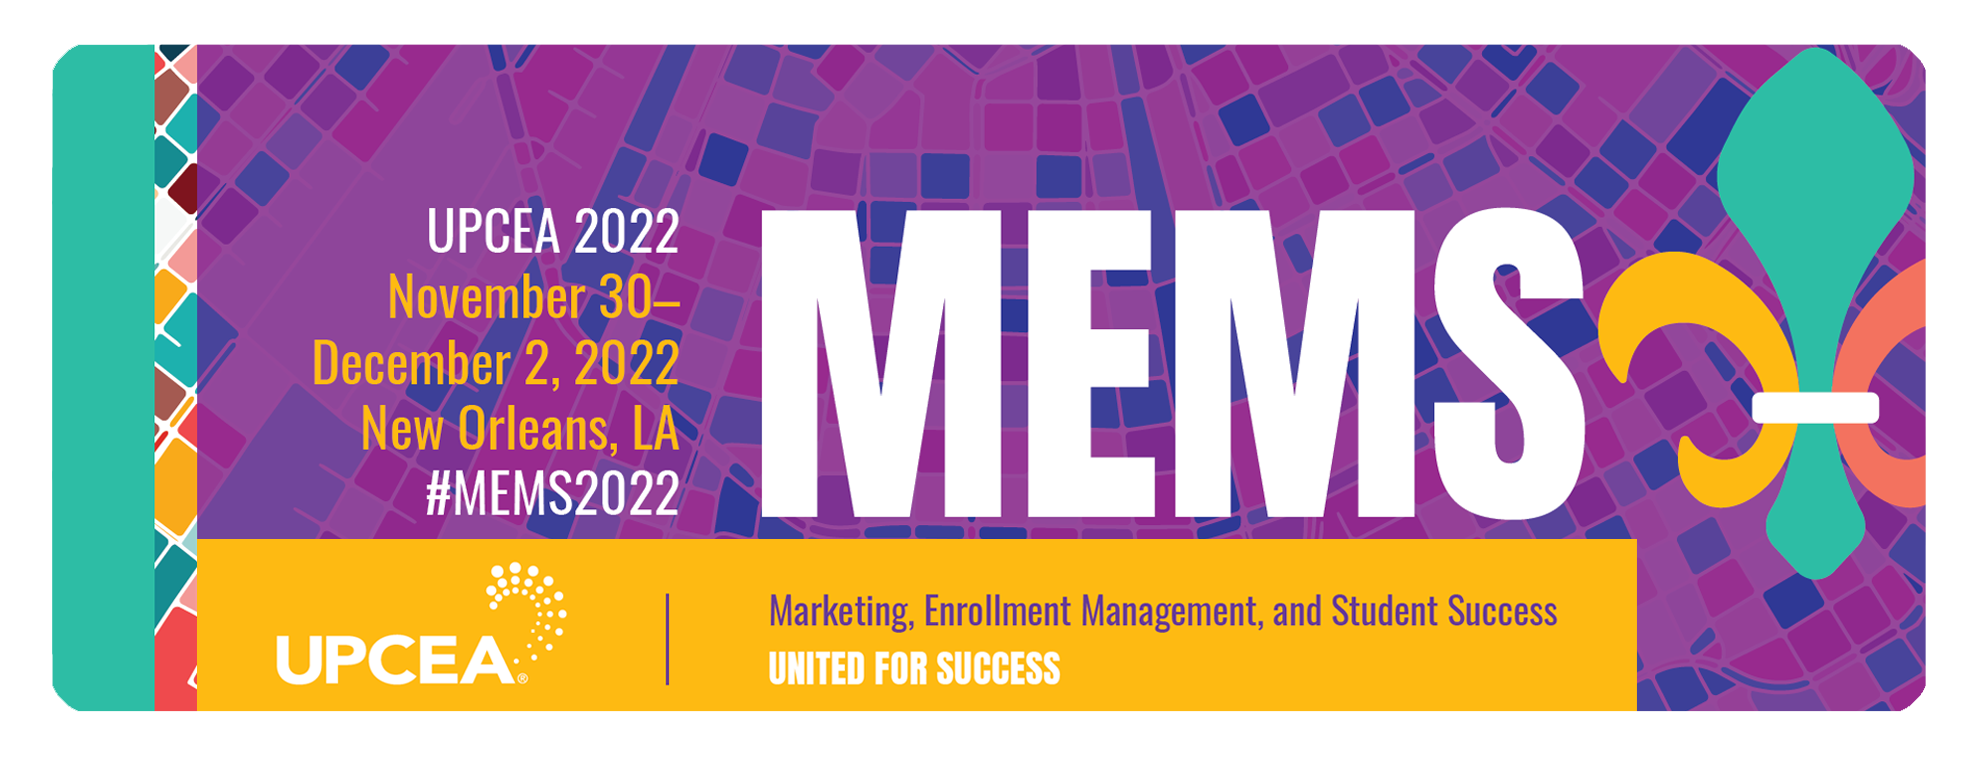 UPCEA 2022 MEMS Marketing Enrollment Management and Student Success | November 30 - December 2, 2022 | New Orleans, LA | #MEMS2022